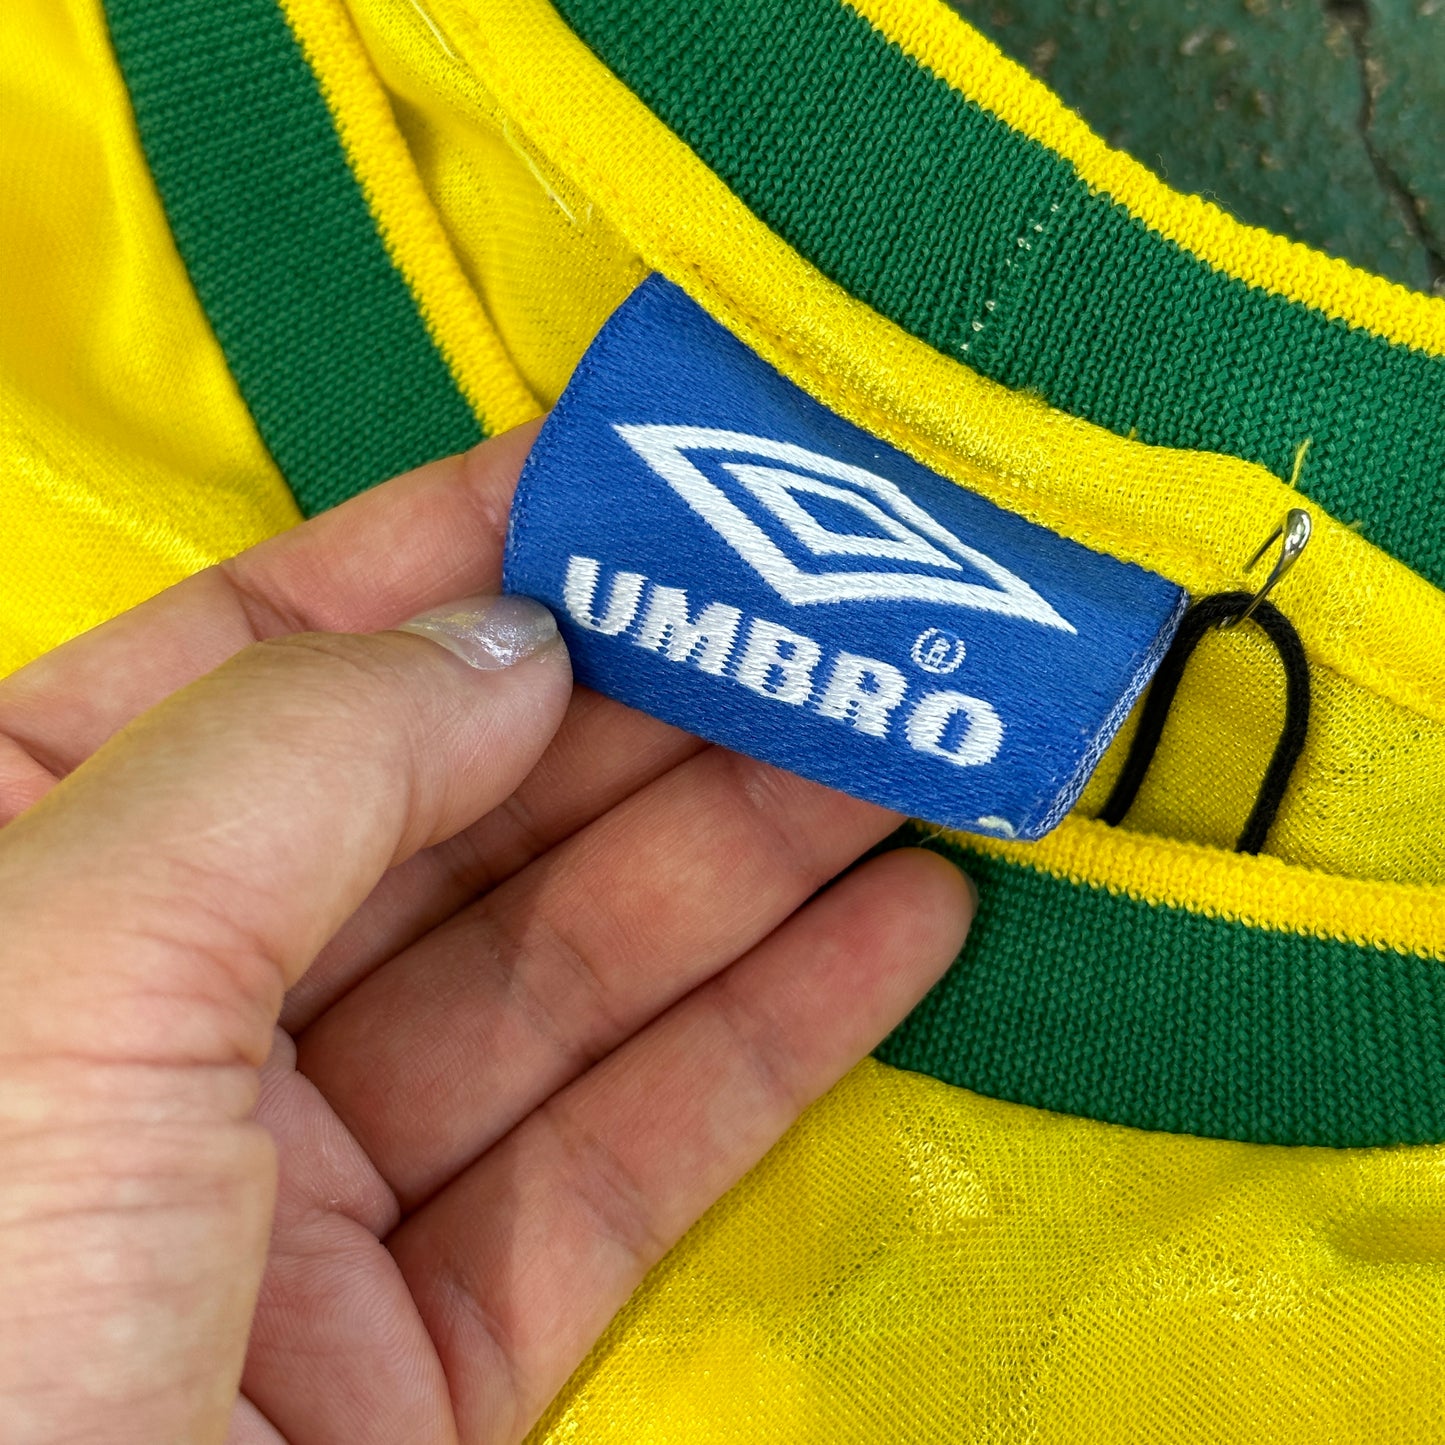 Vintage Brazil 90's x Umbro Fan Cheer home jersey